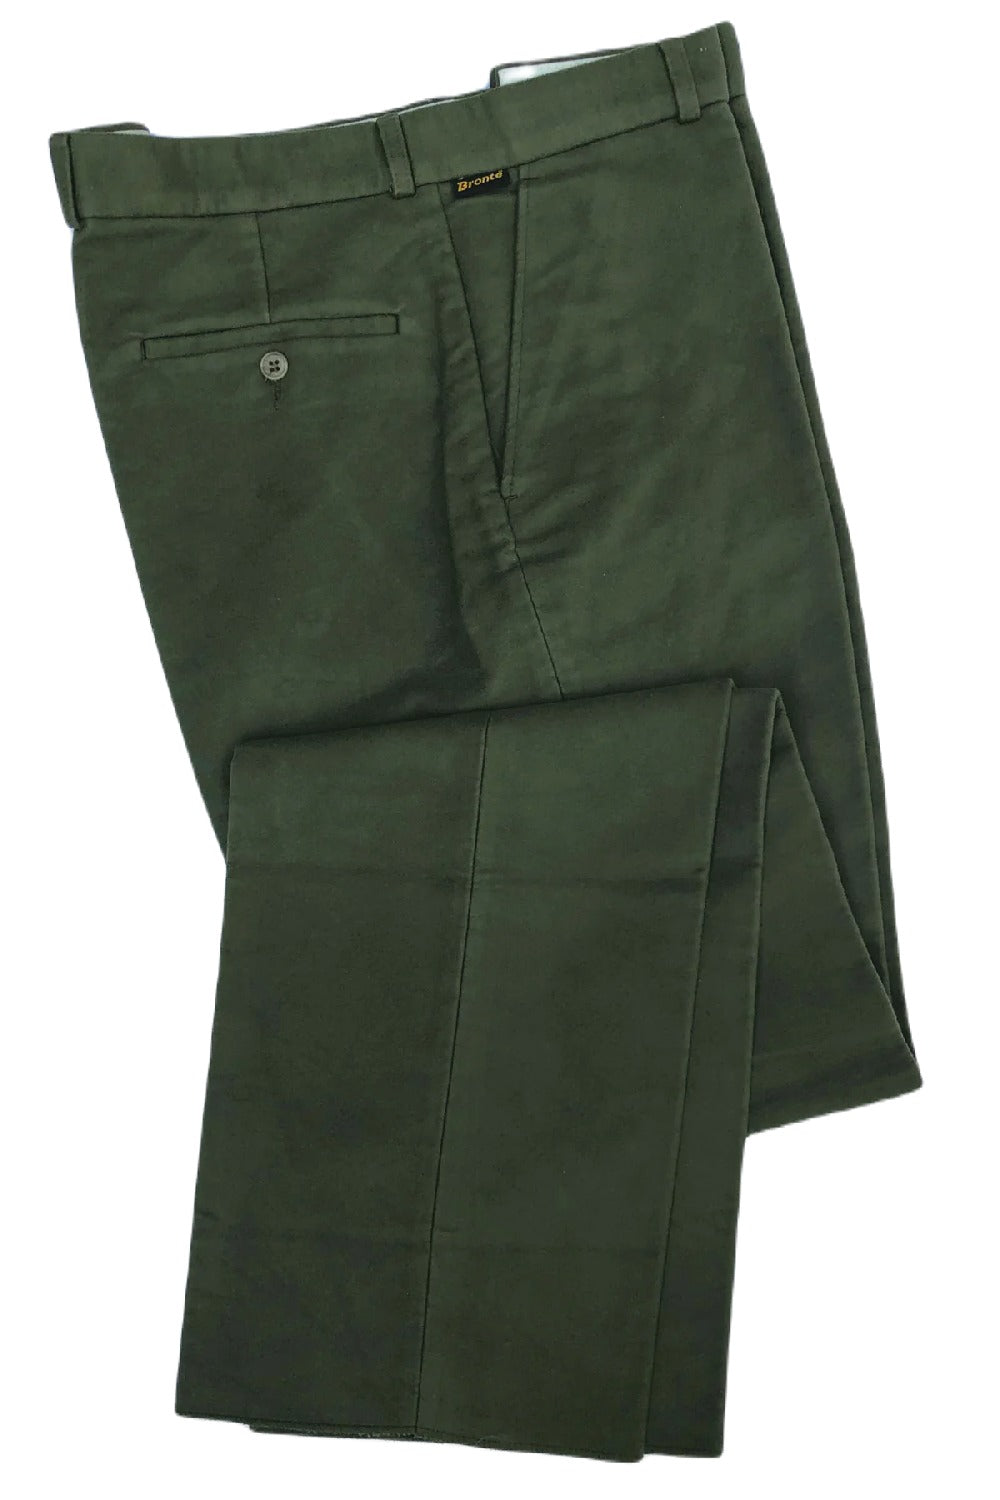 Green Moleskin Trousers  New  Lingwood